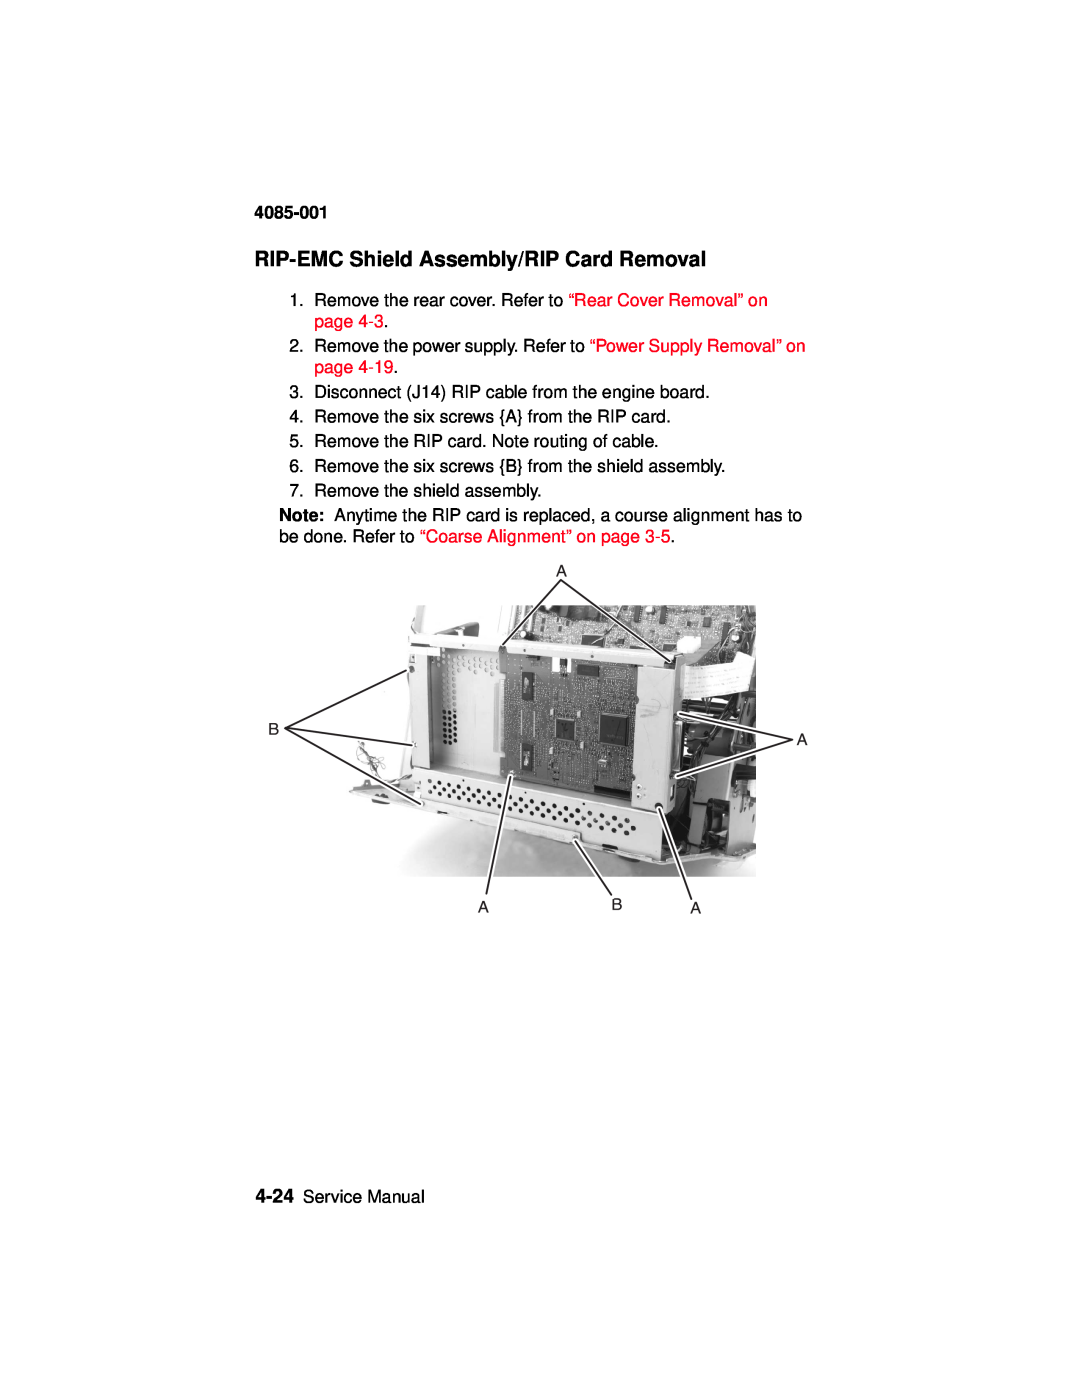 Lexmark J110, Printer manual RIP-EMCShield Assembly/RIP Card Removal, 4085-001 